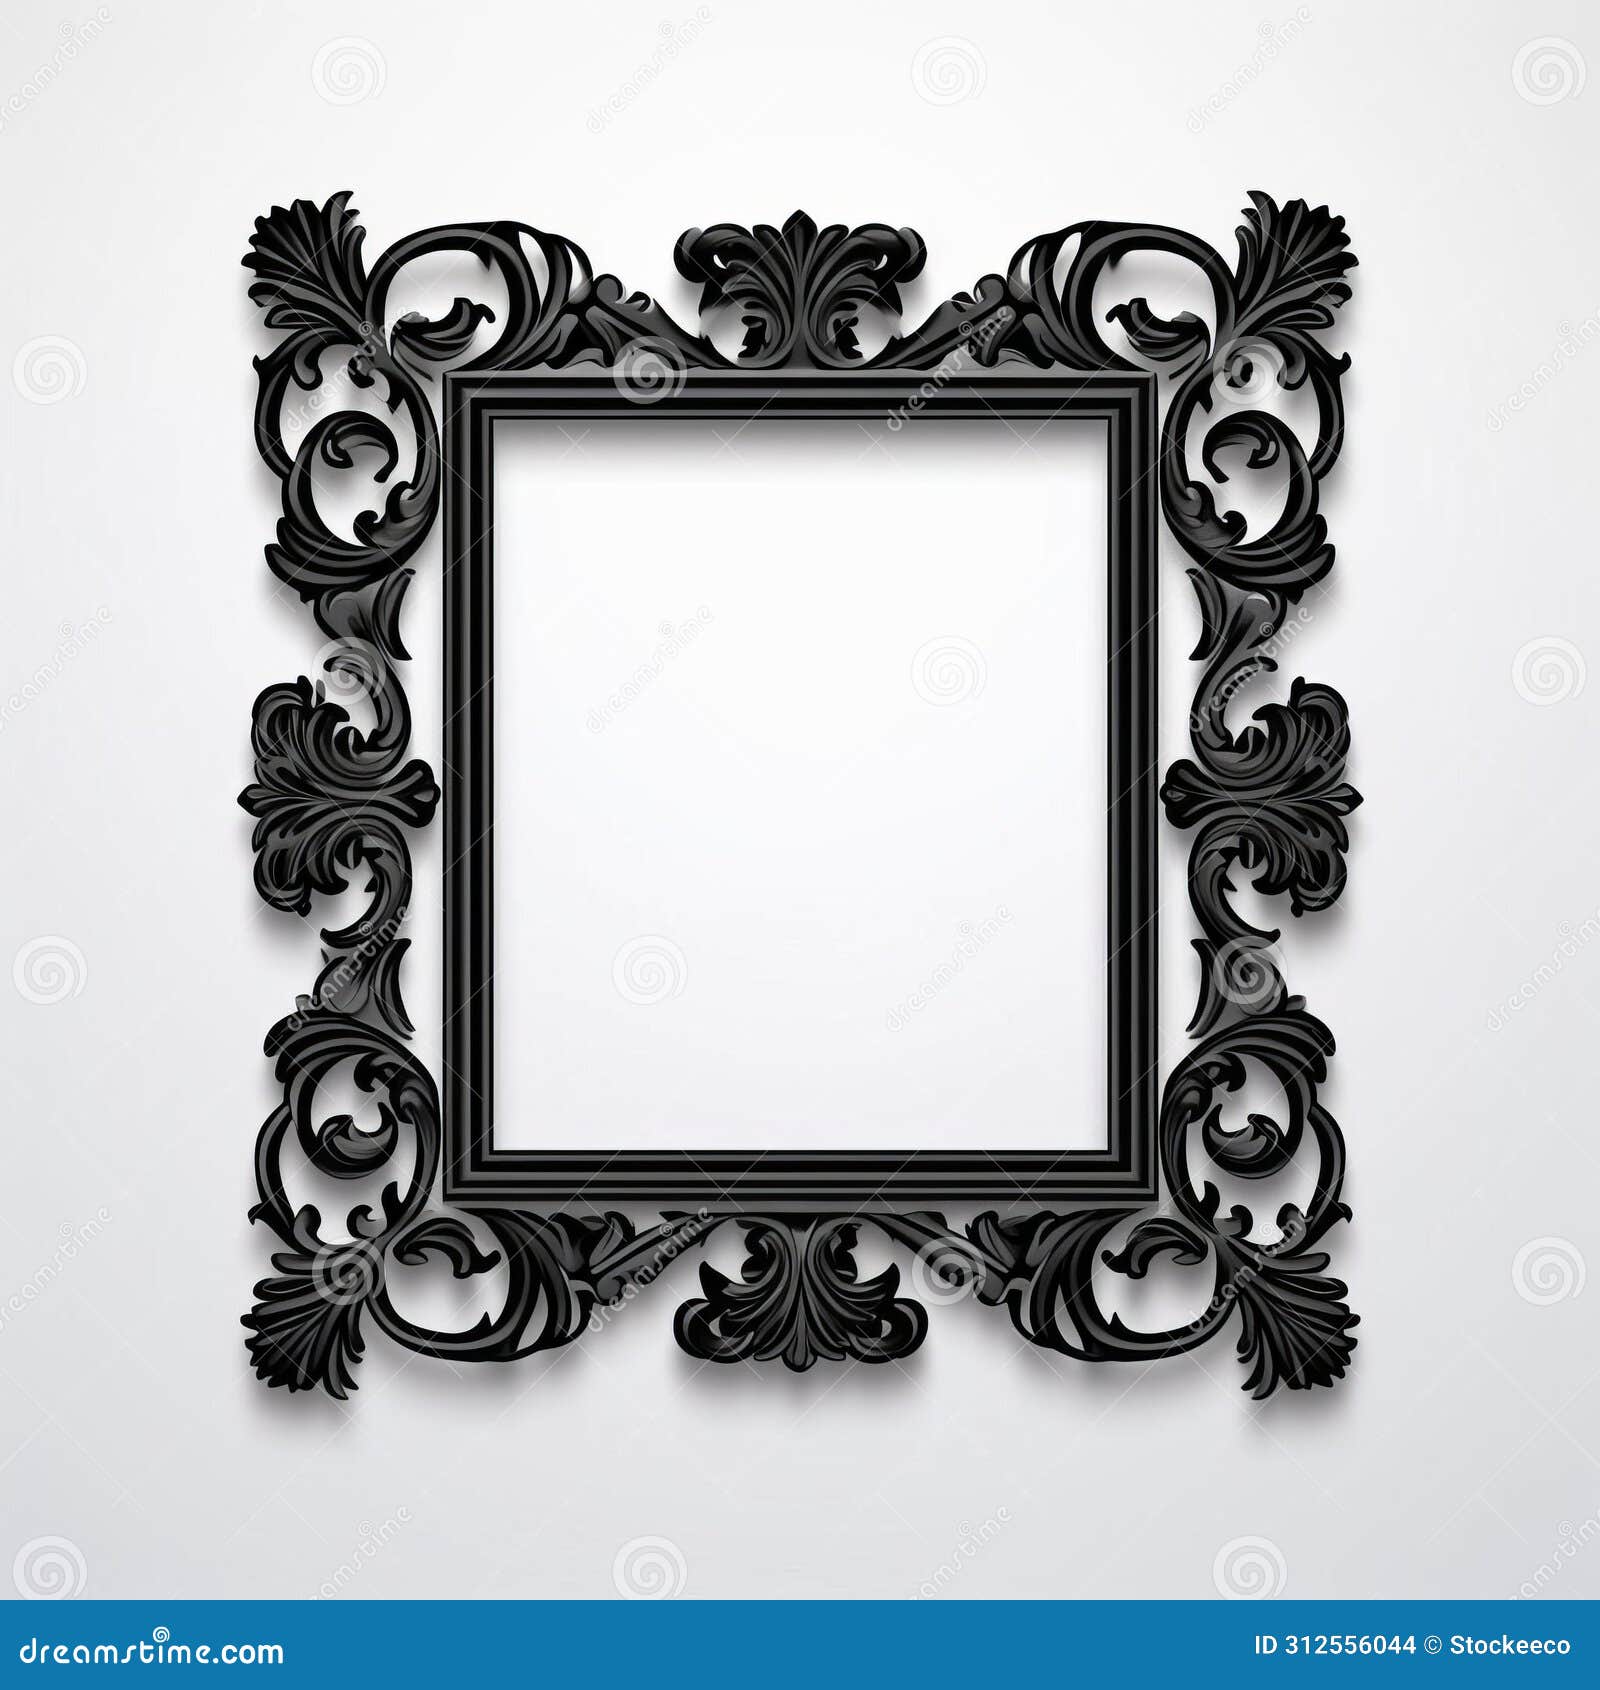 vintage black mirror frame on gray background